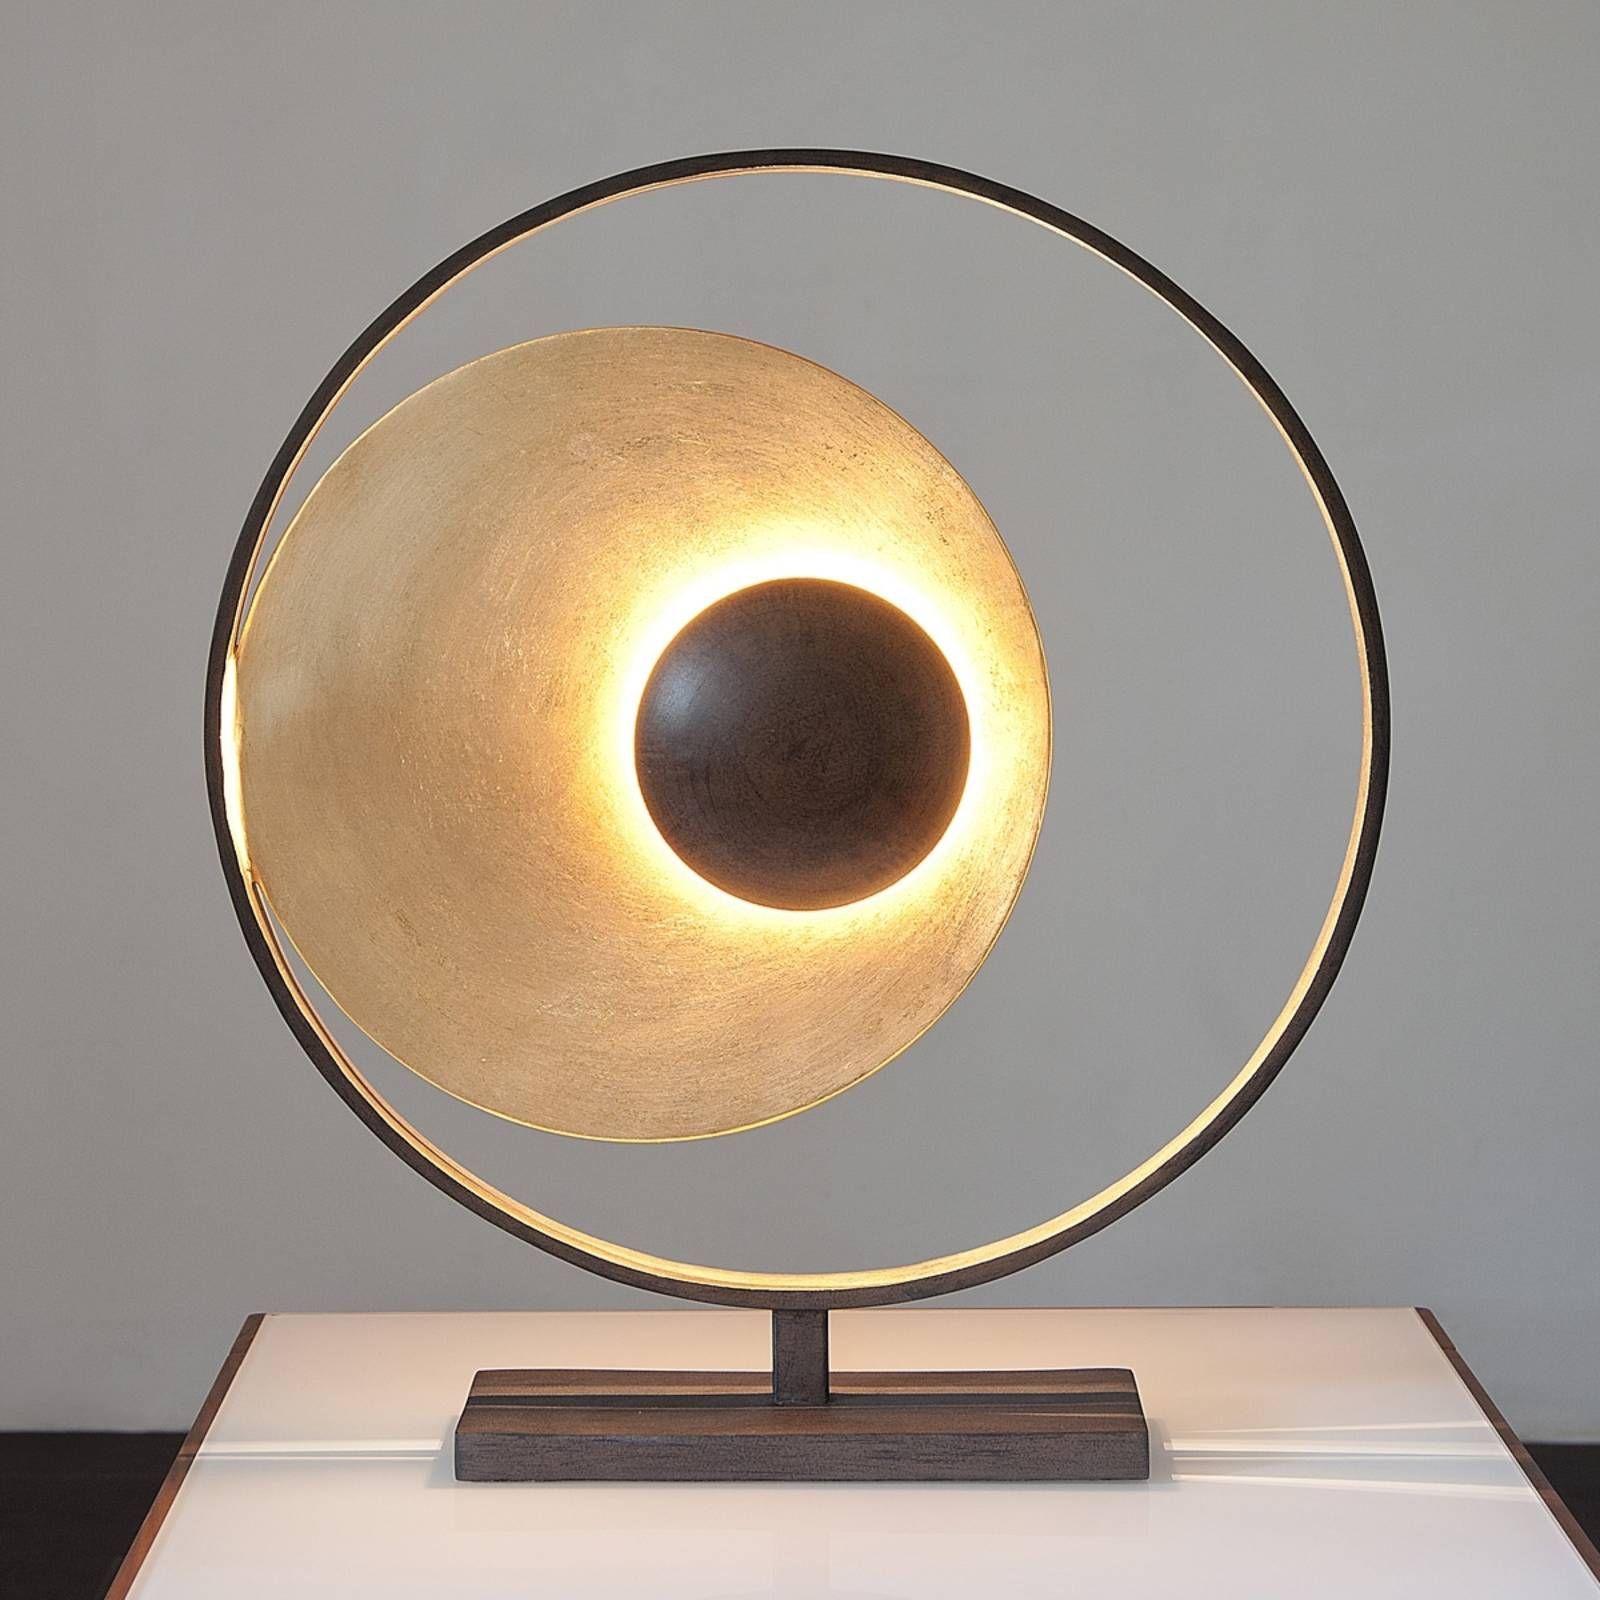 Holländer Stolová lampa Satellite zlato-hnedá, výška 58, Obývacia izba / jedáleň, železo, G4, 5W, P: 51 cm, L: 17 cm, K: 58cm